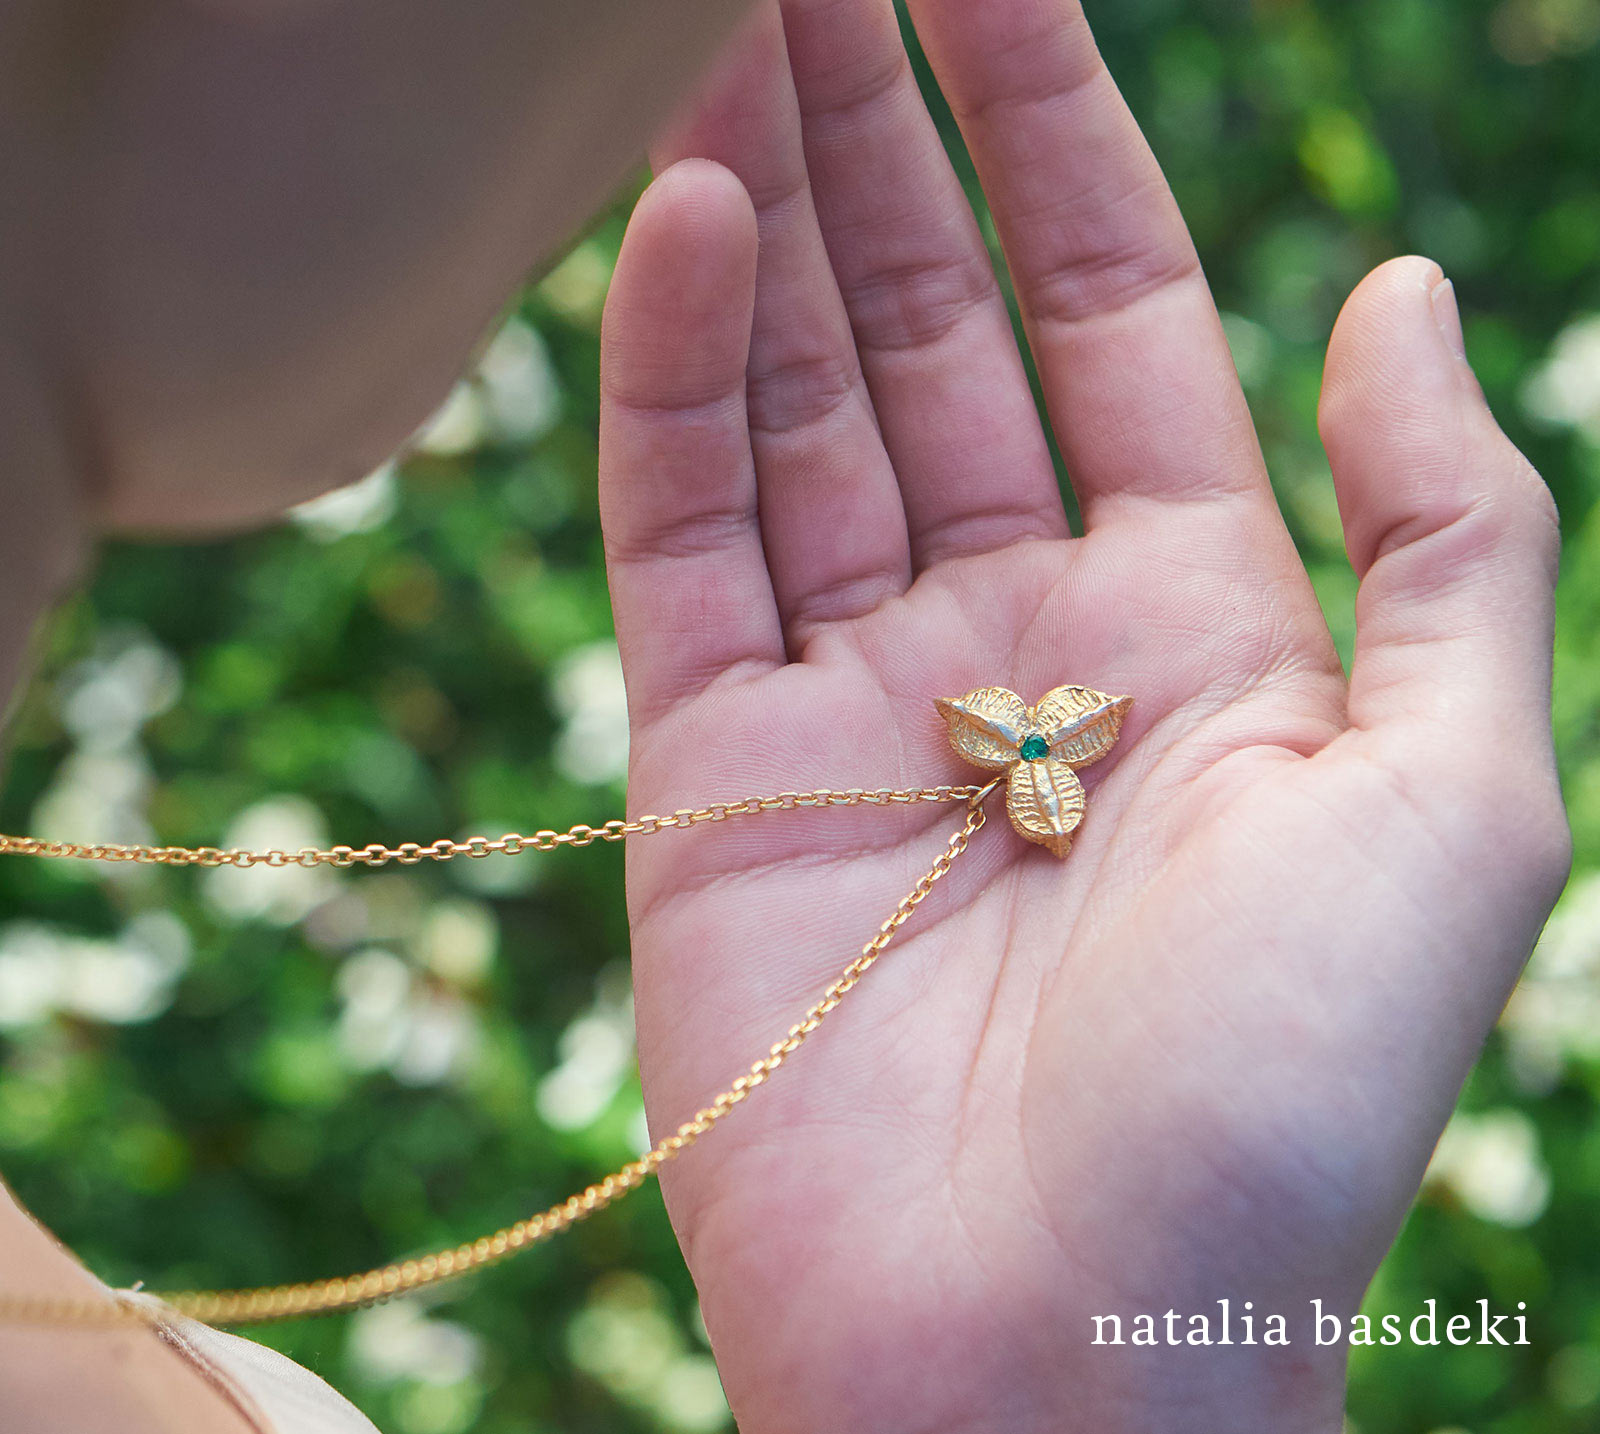 Natalia-Basdeki-Jewelry